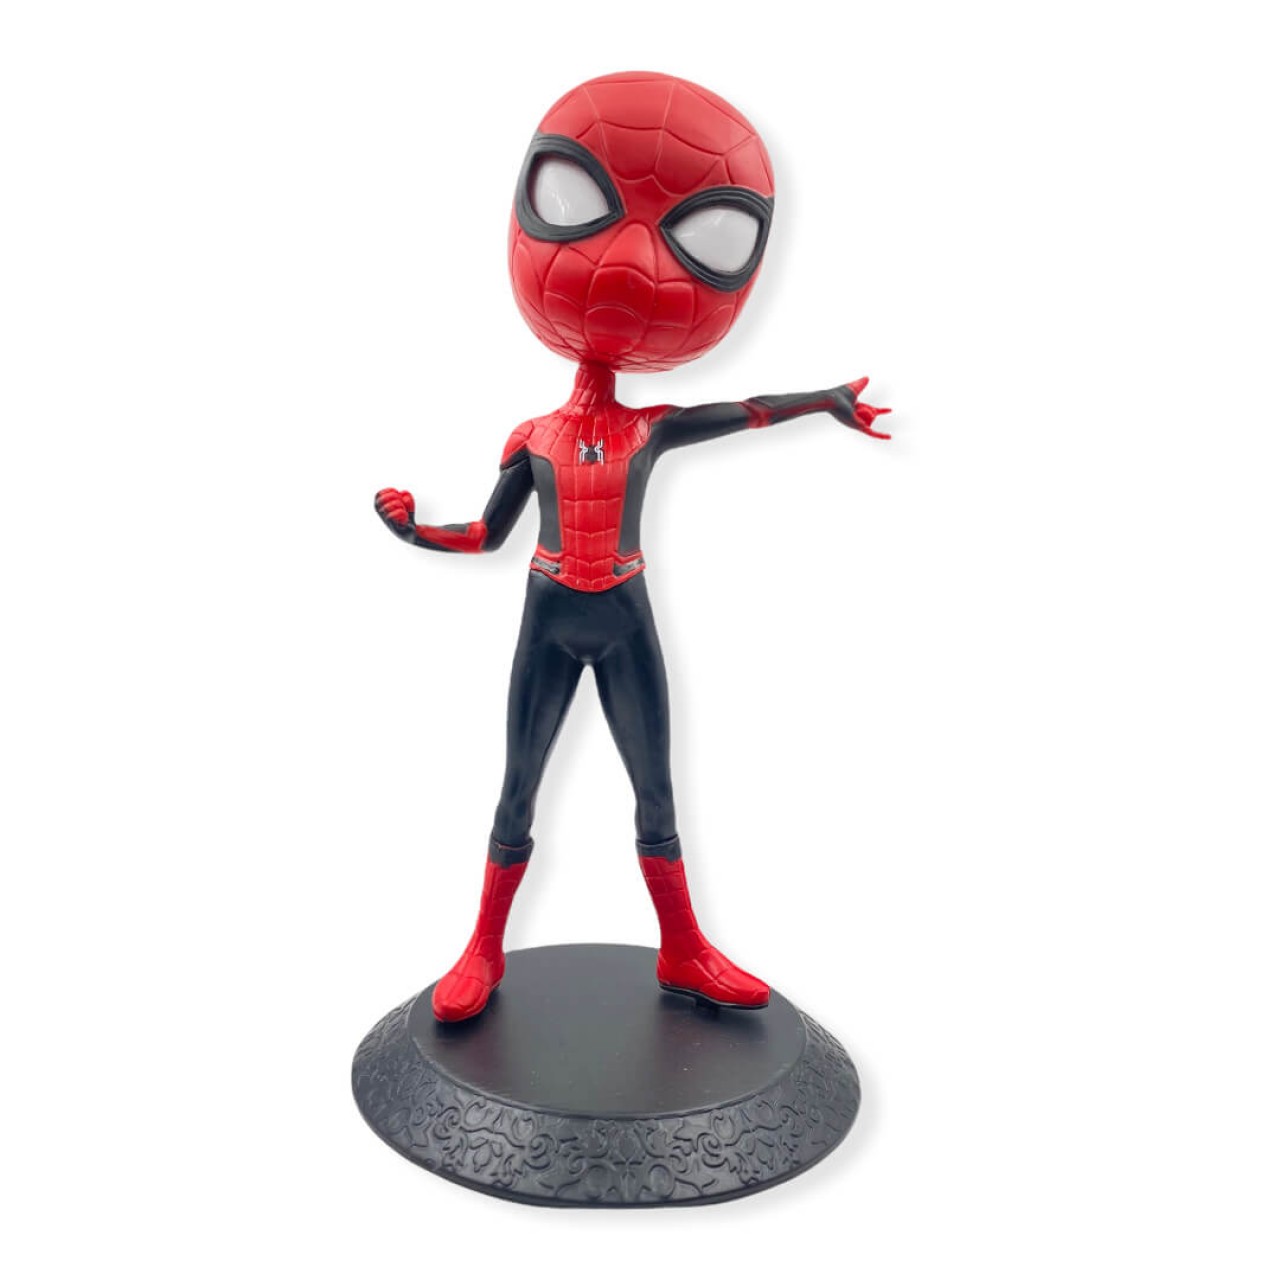 Spider-Man Decorative Action Figure